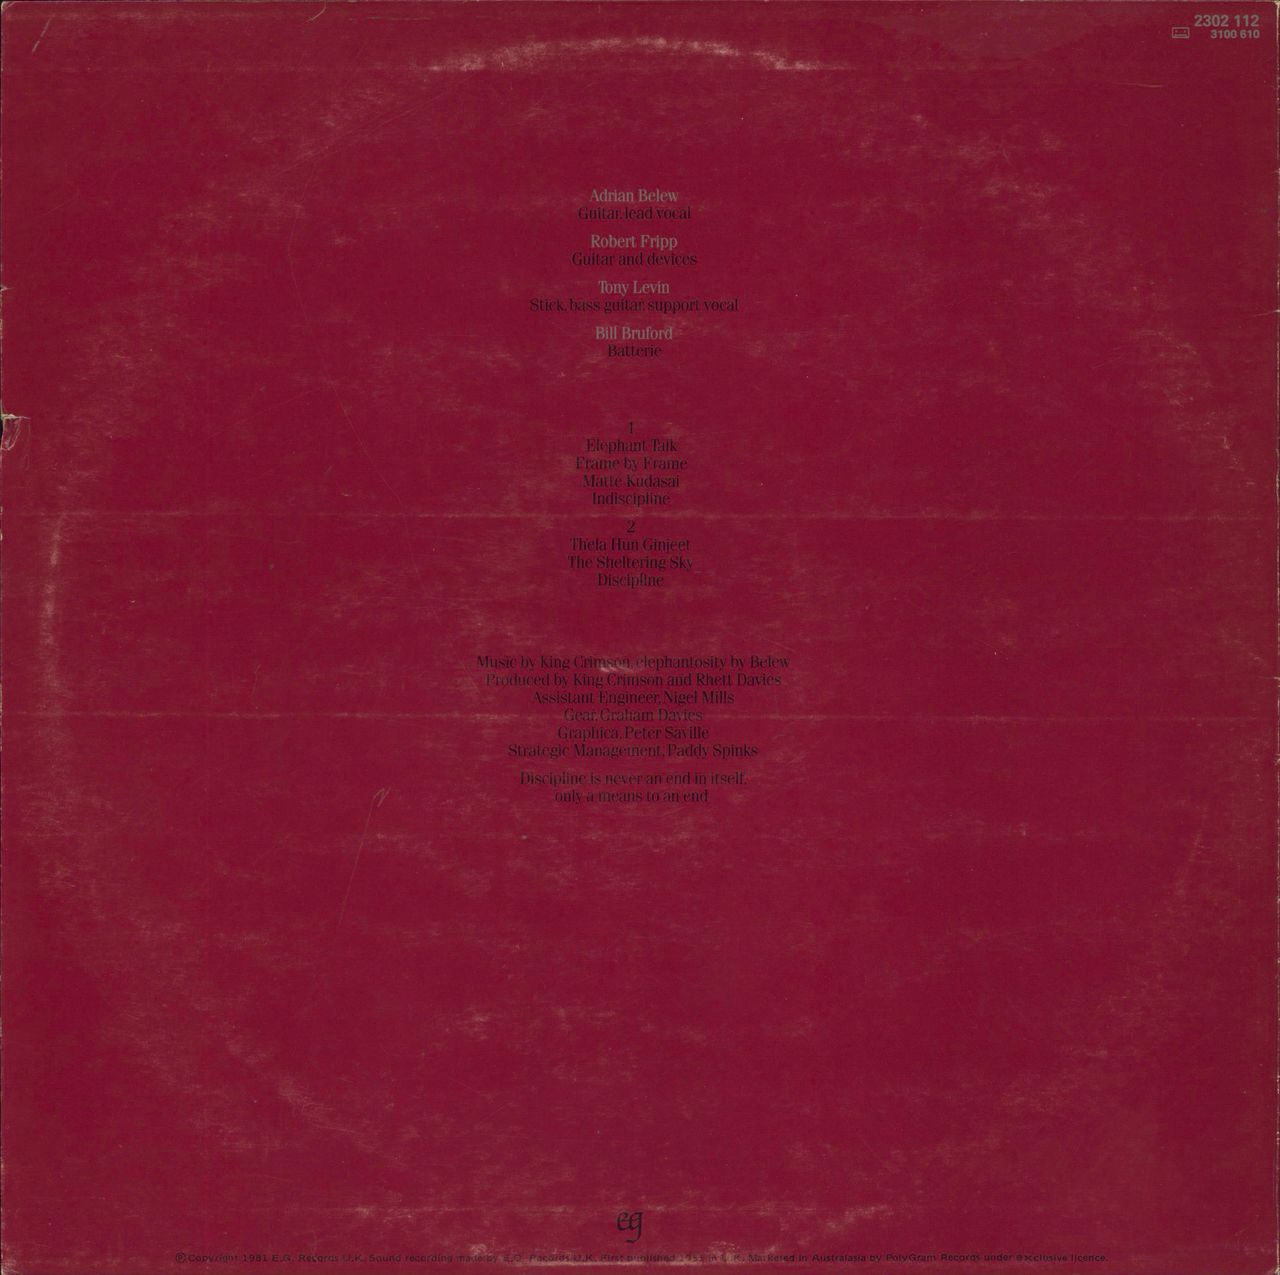 King Crimson Discipline Australian Vinyl LP Album Record 2302112 EG 1981